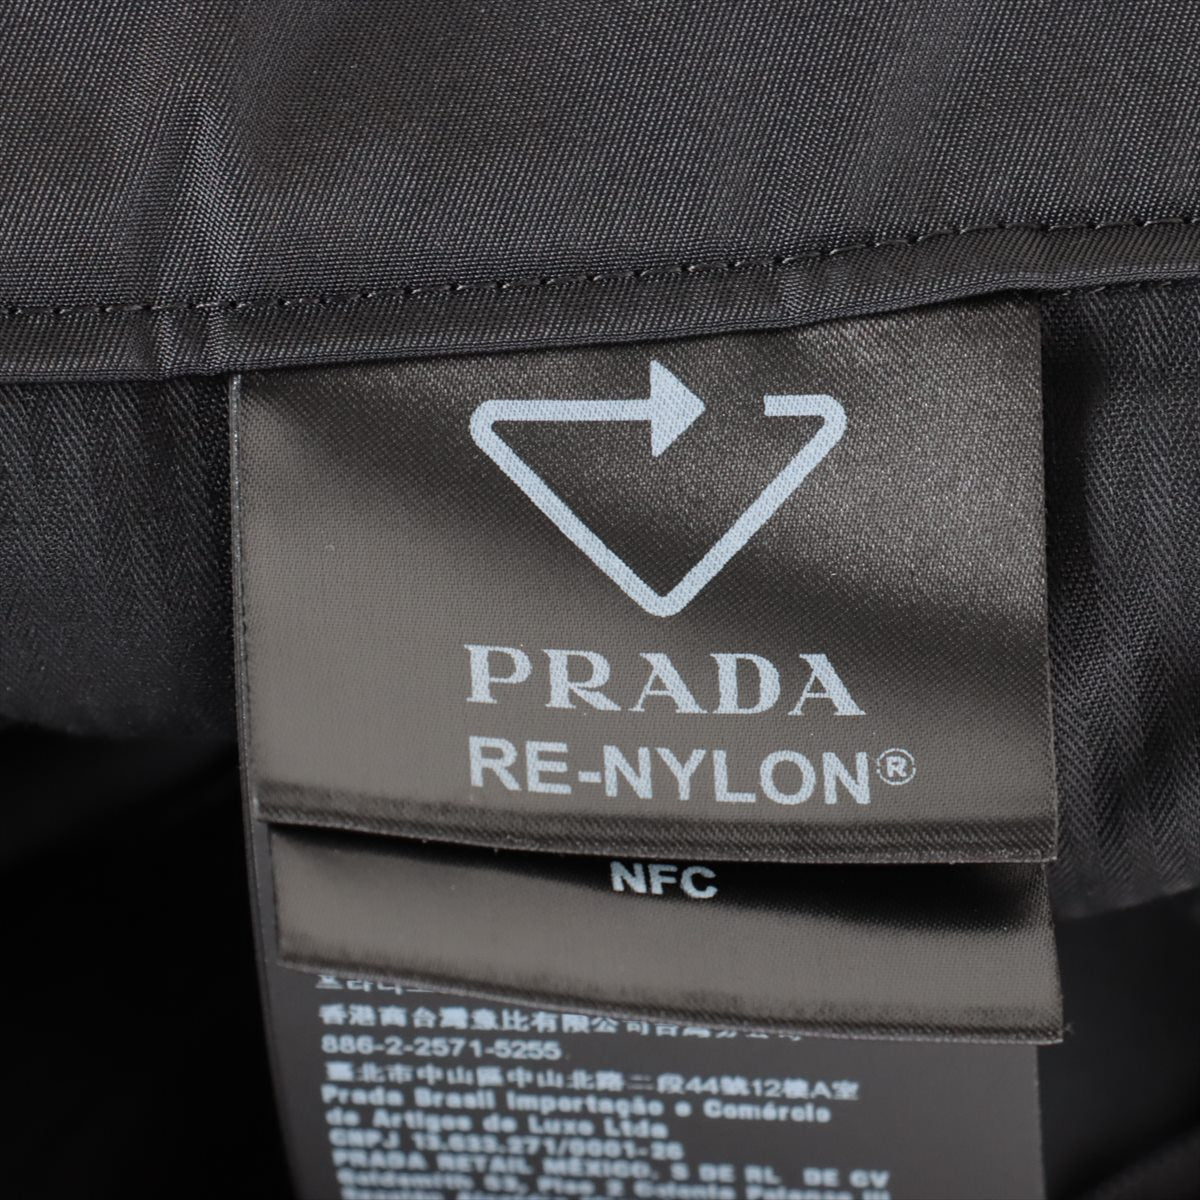 Prada Re Nylon Re Nylon 23 years Nylon Pants 44 Men's Black  Triangular logo plate Bermuda shorts